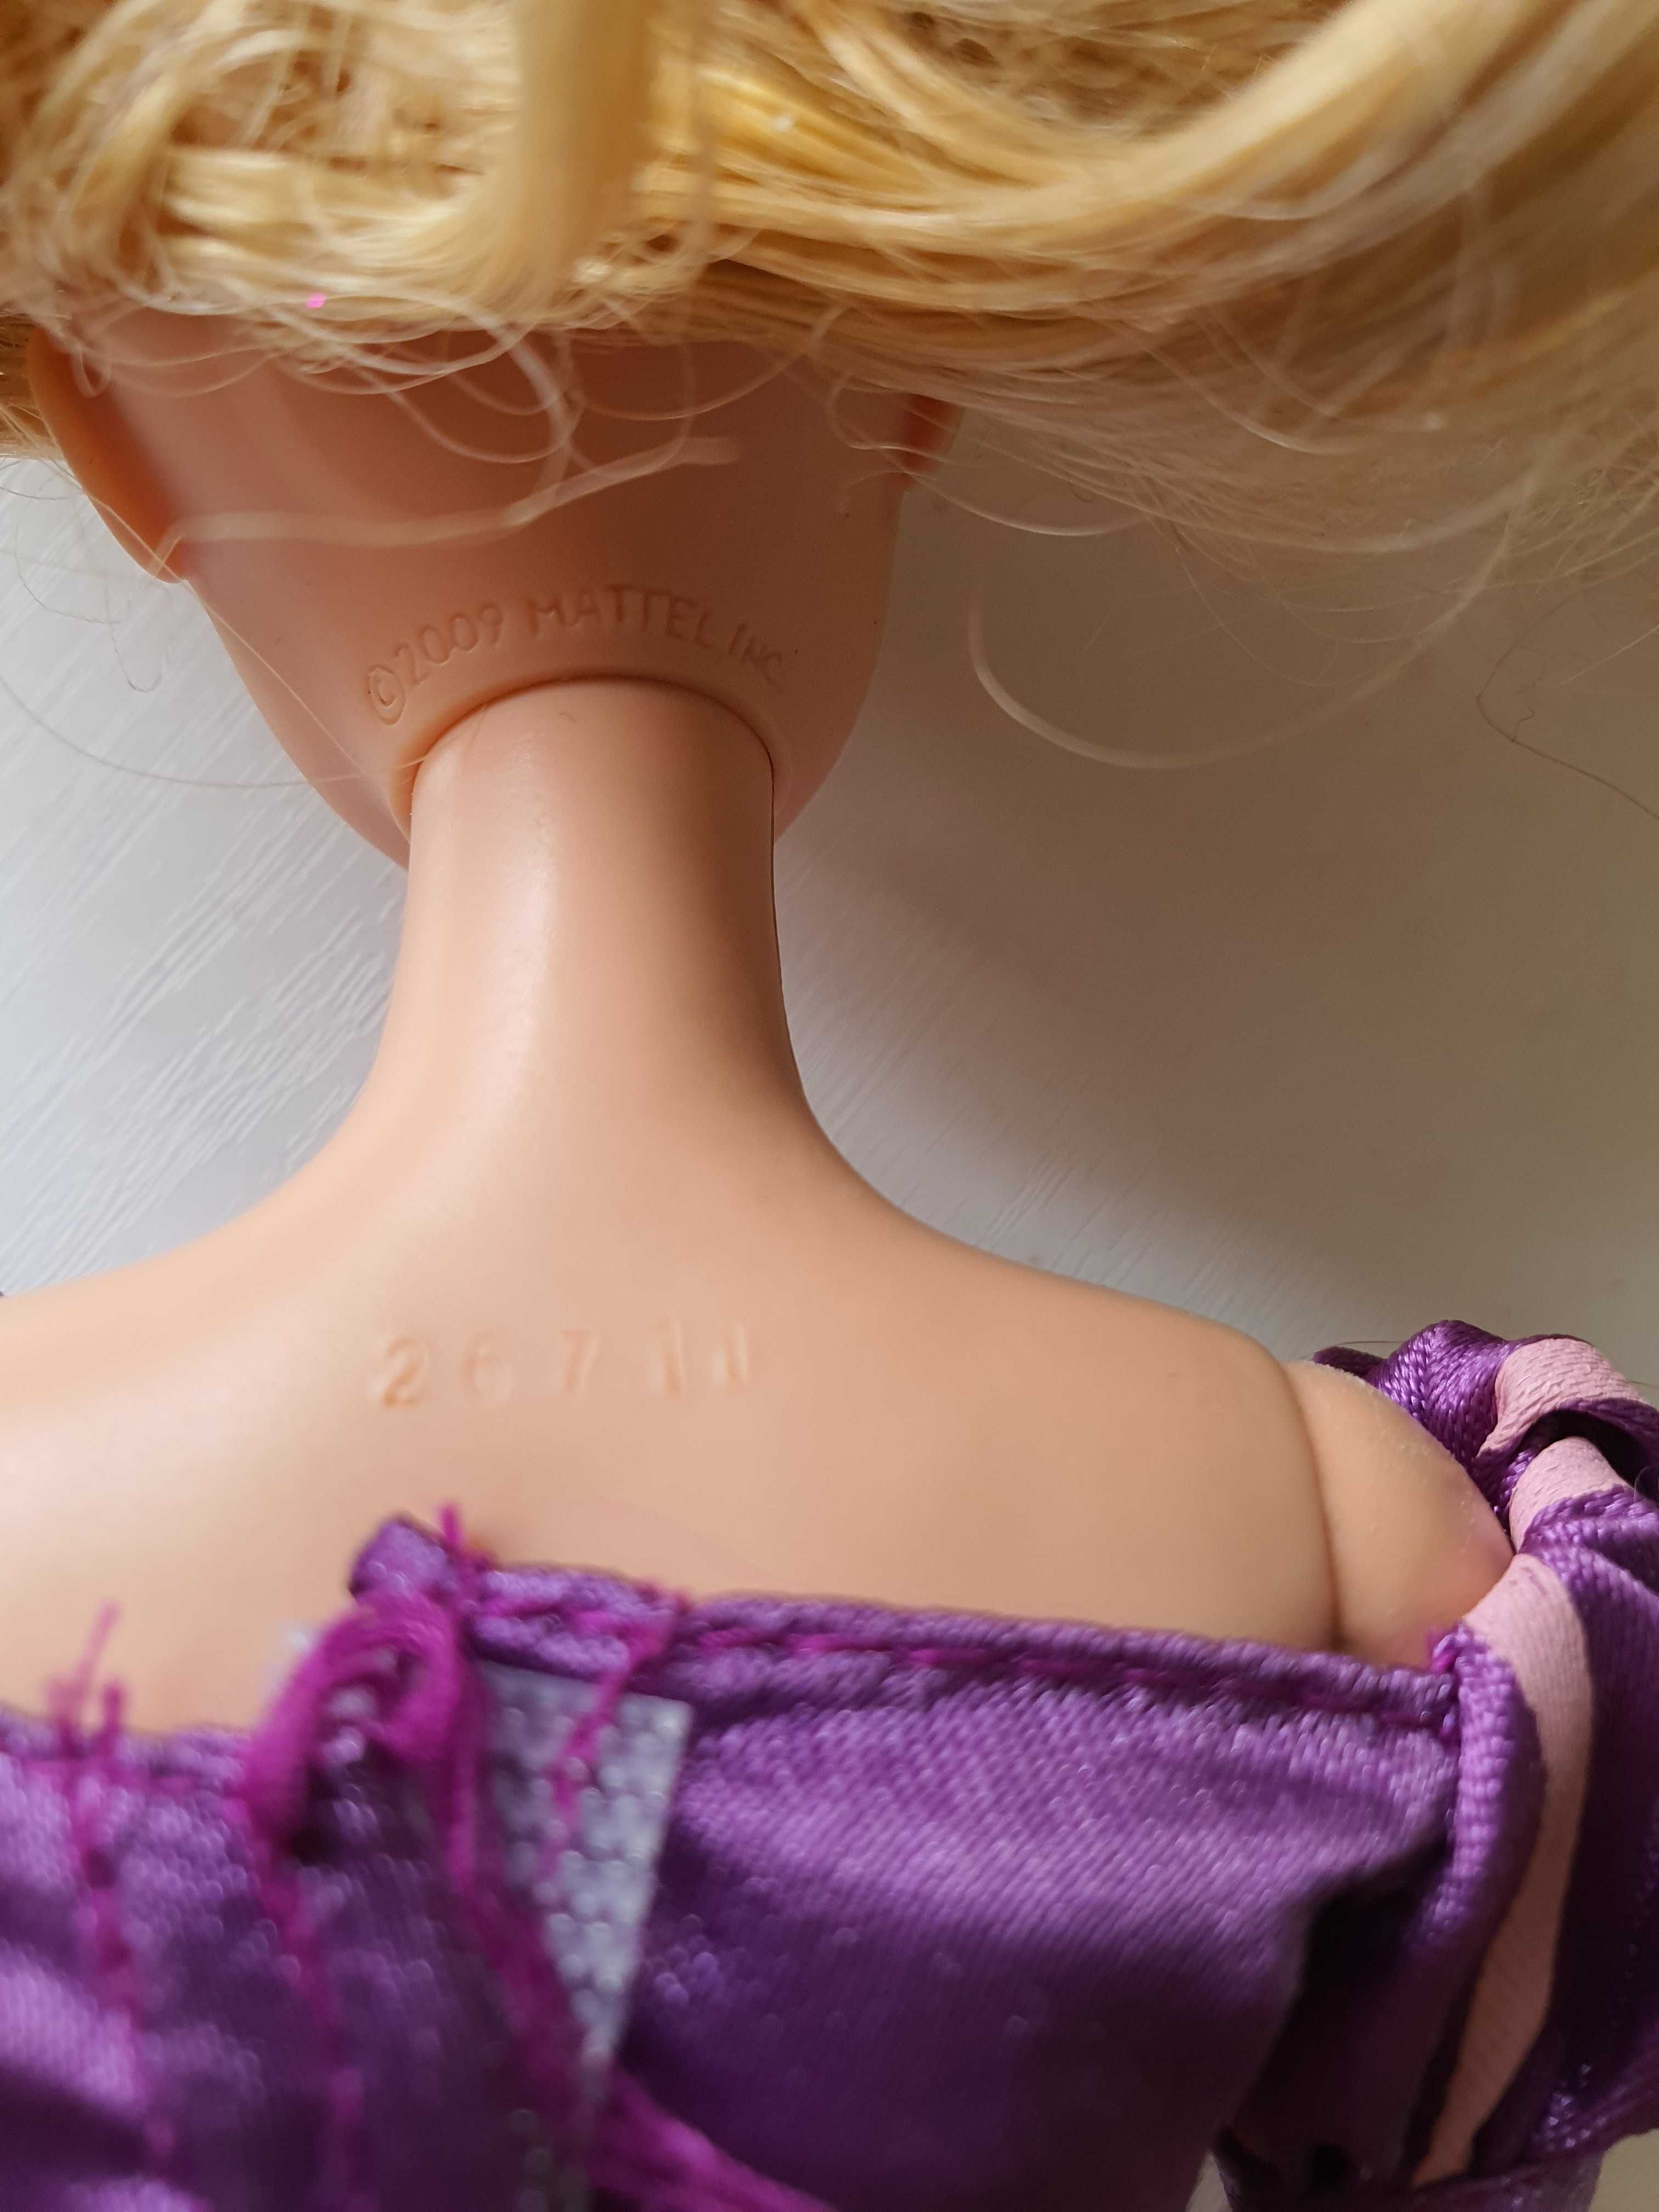 Papusa Rapunzel Mattel Disney Tangled Sing care lumineaza